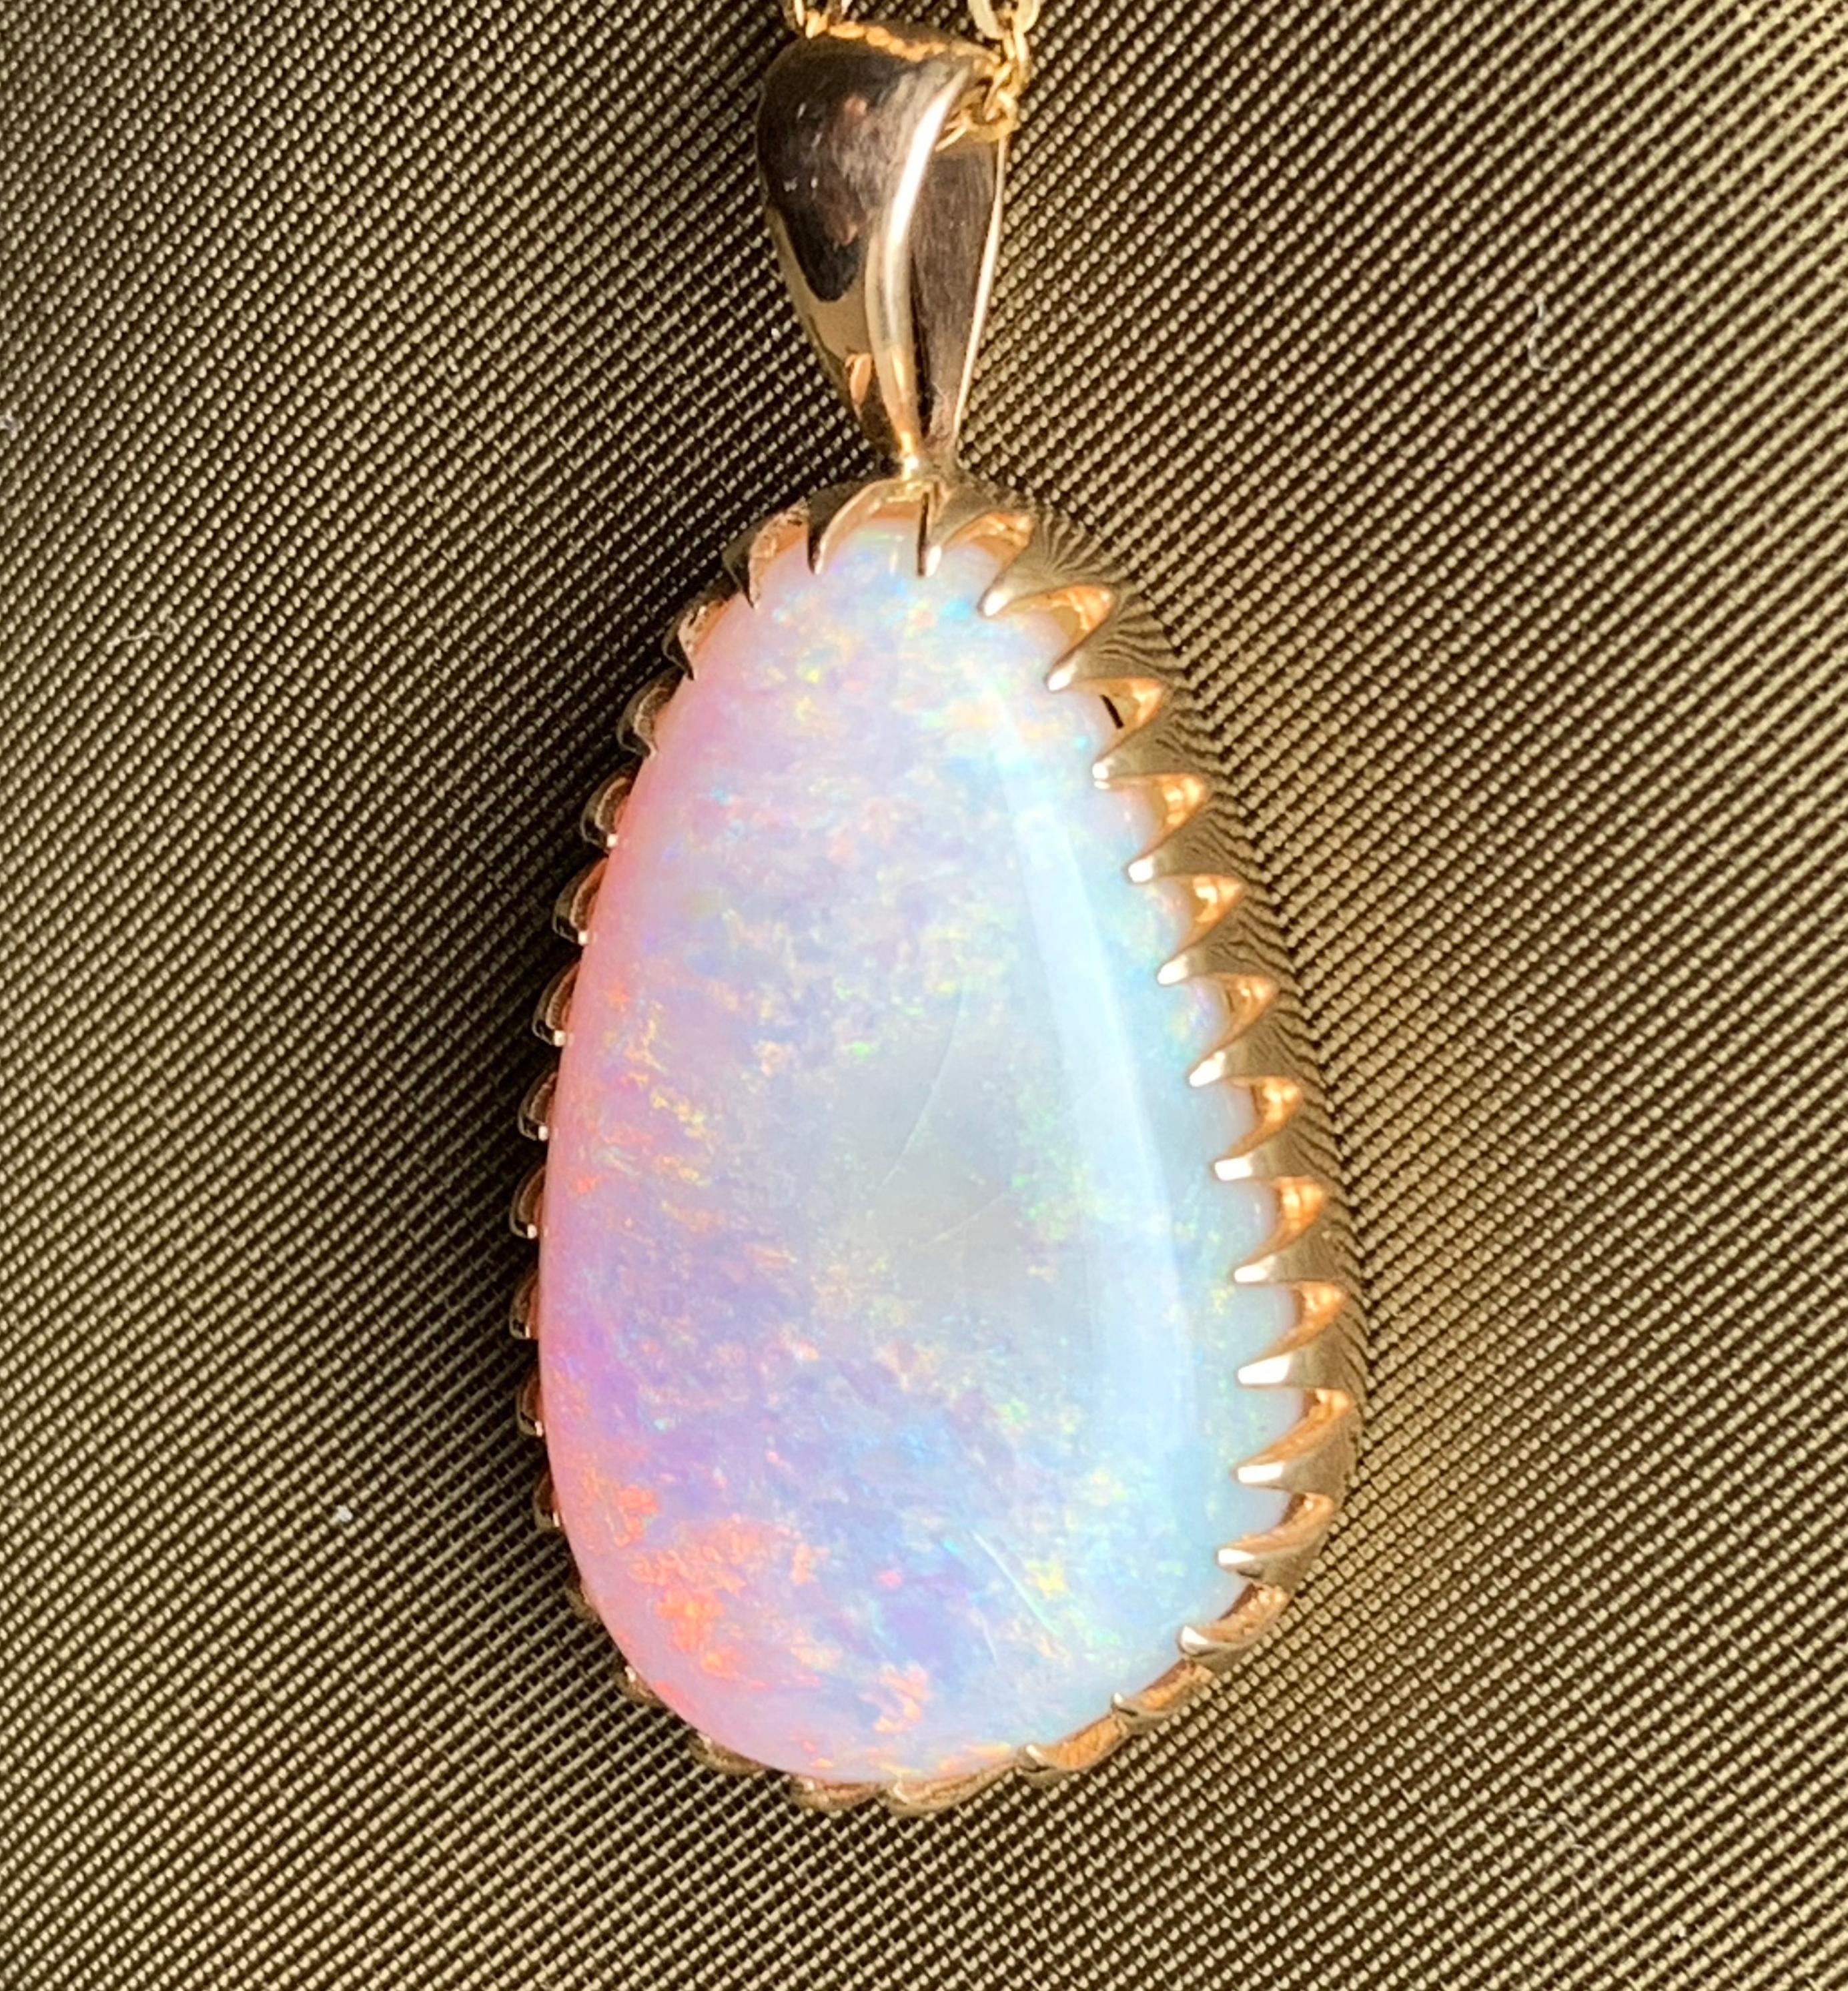 Contemporary 10 Carat Opal Pendant